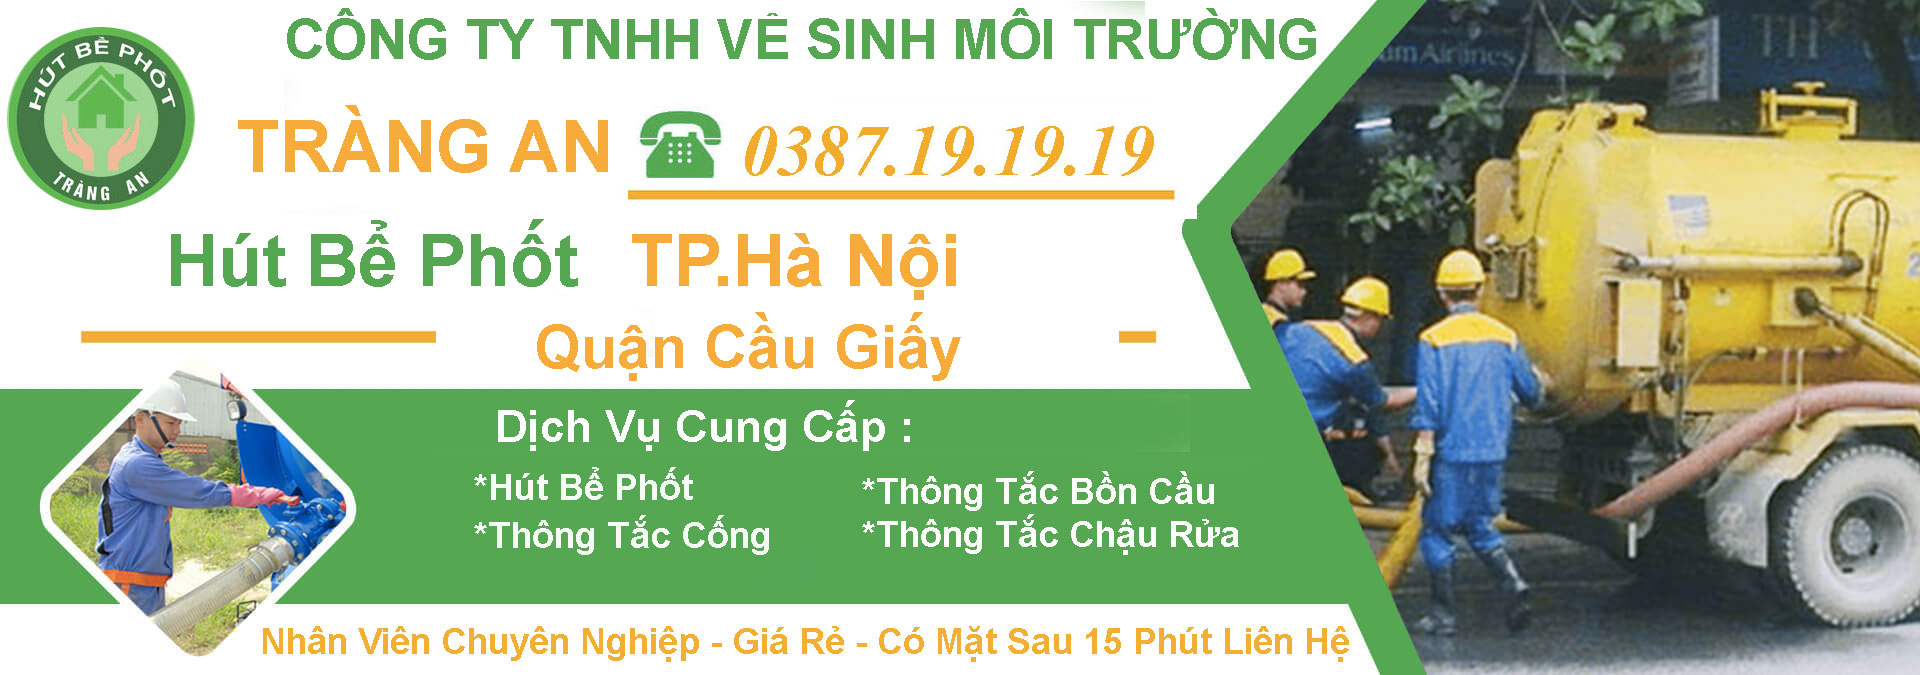 Hut Be Phot Ha Noi Cau Giay